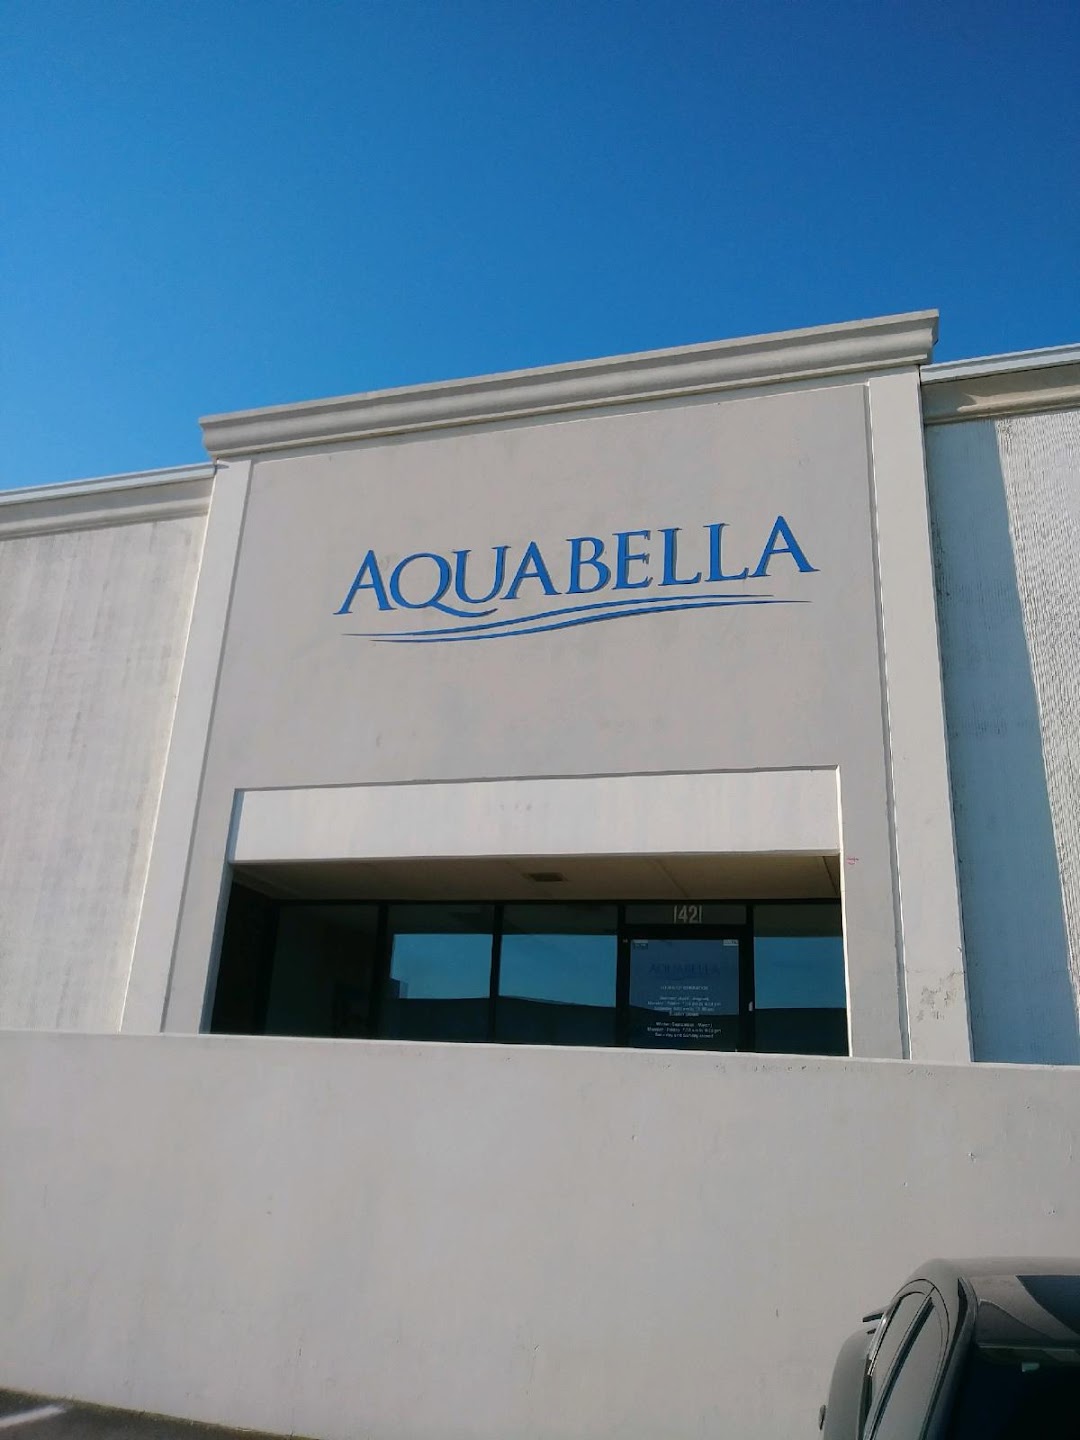 Aquabella - Pool, Kitchen & Bath Tile & Natural Stone